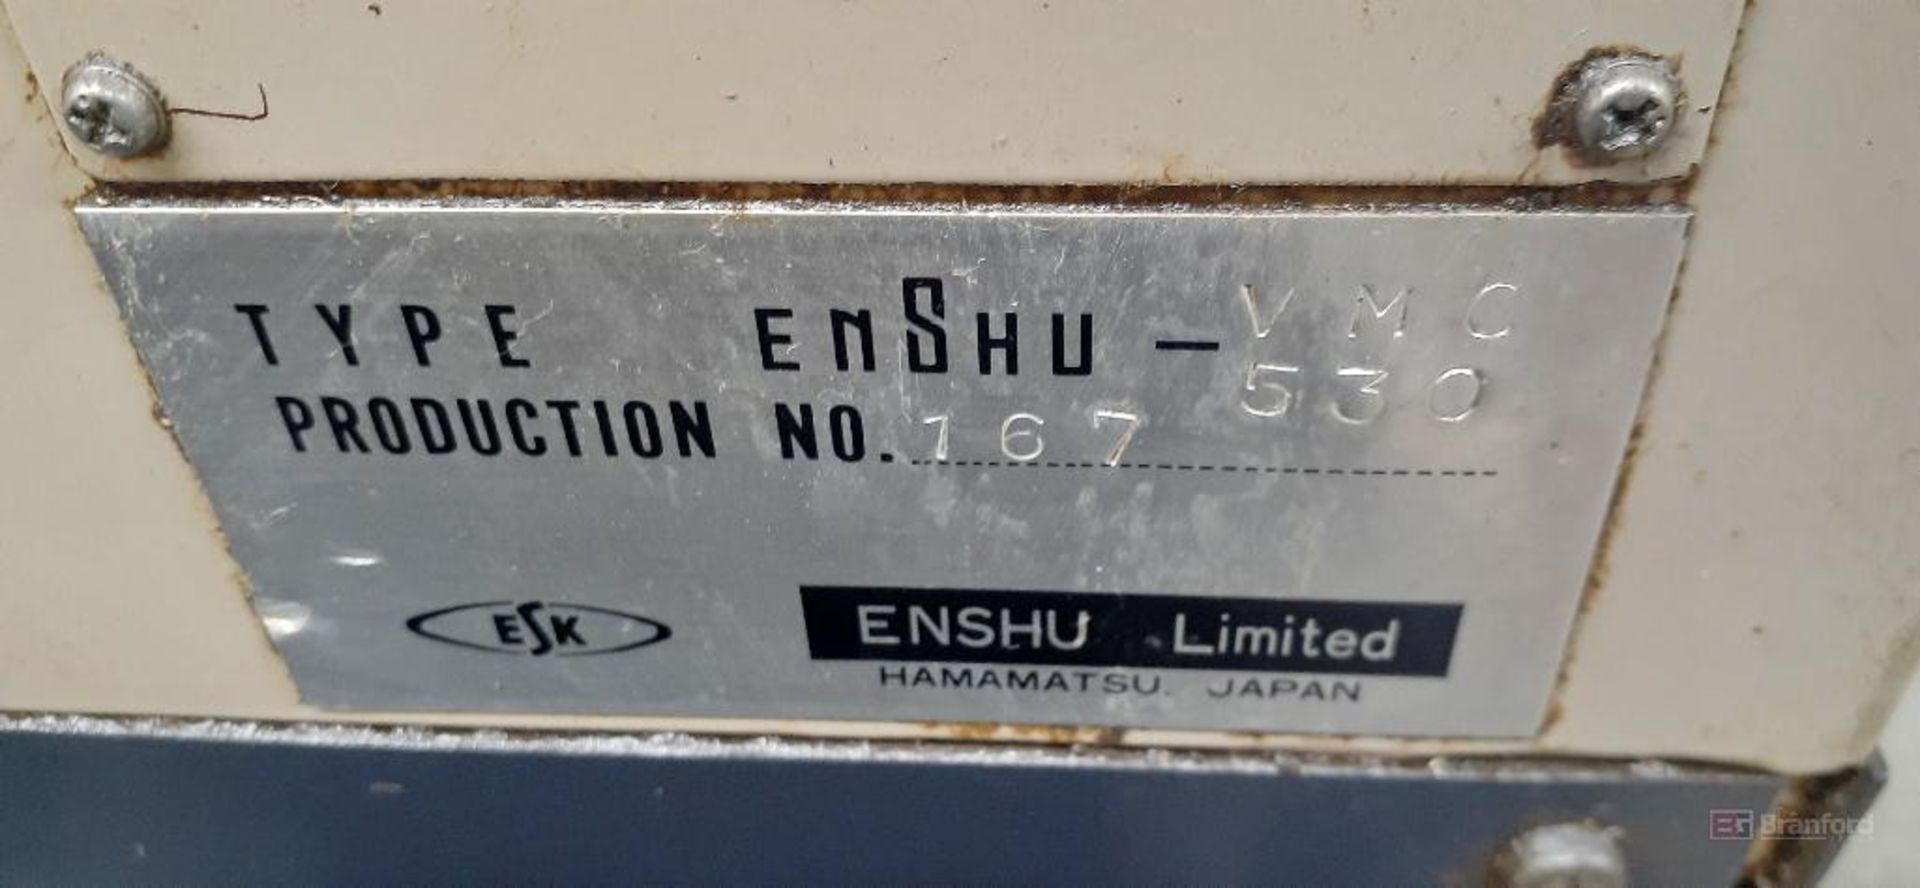 Enshu Model VMC530, CNC Vertical Machining Center - Image 13 of 16